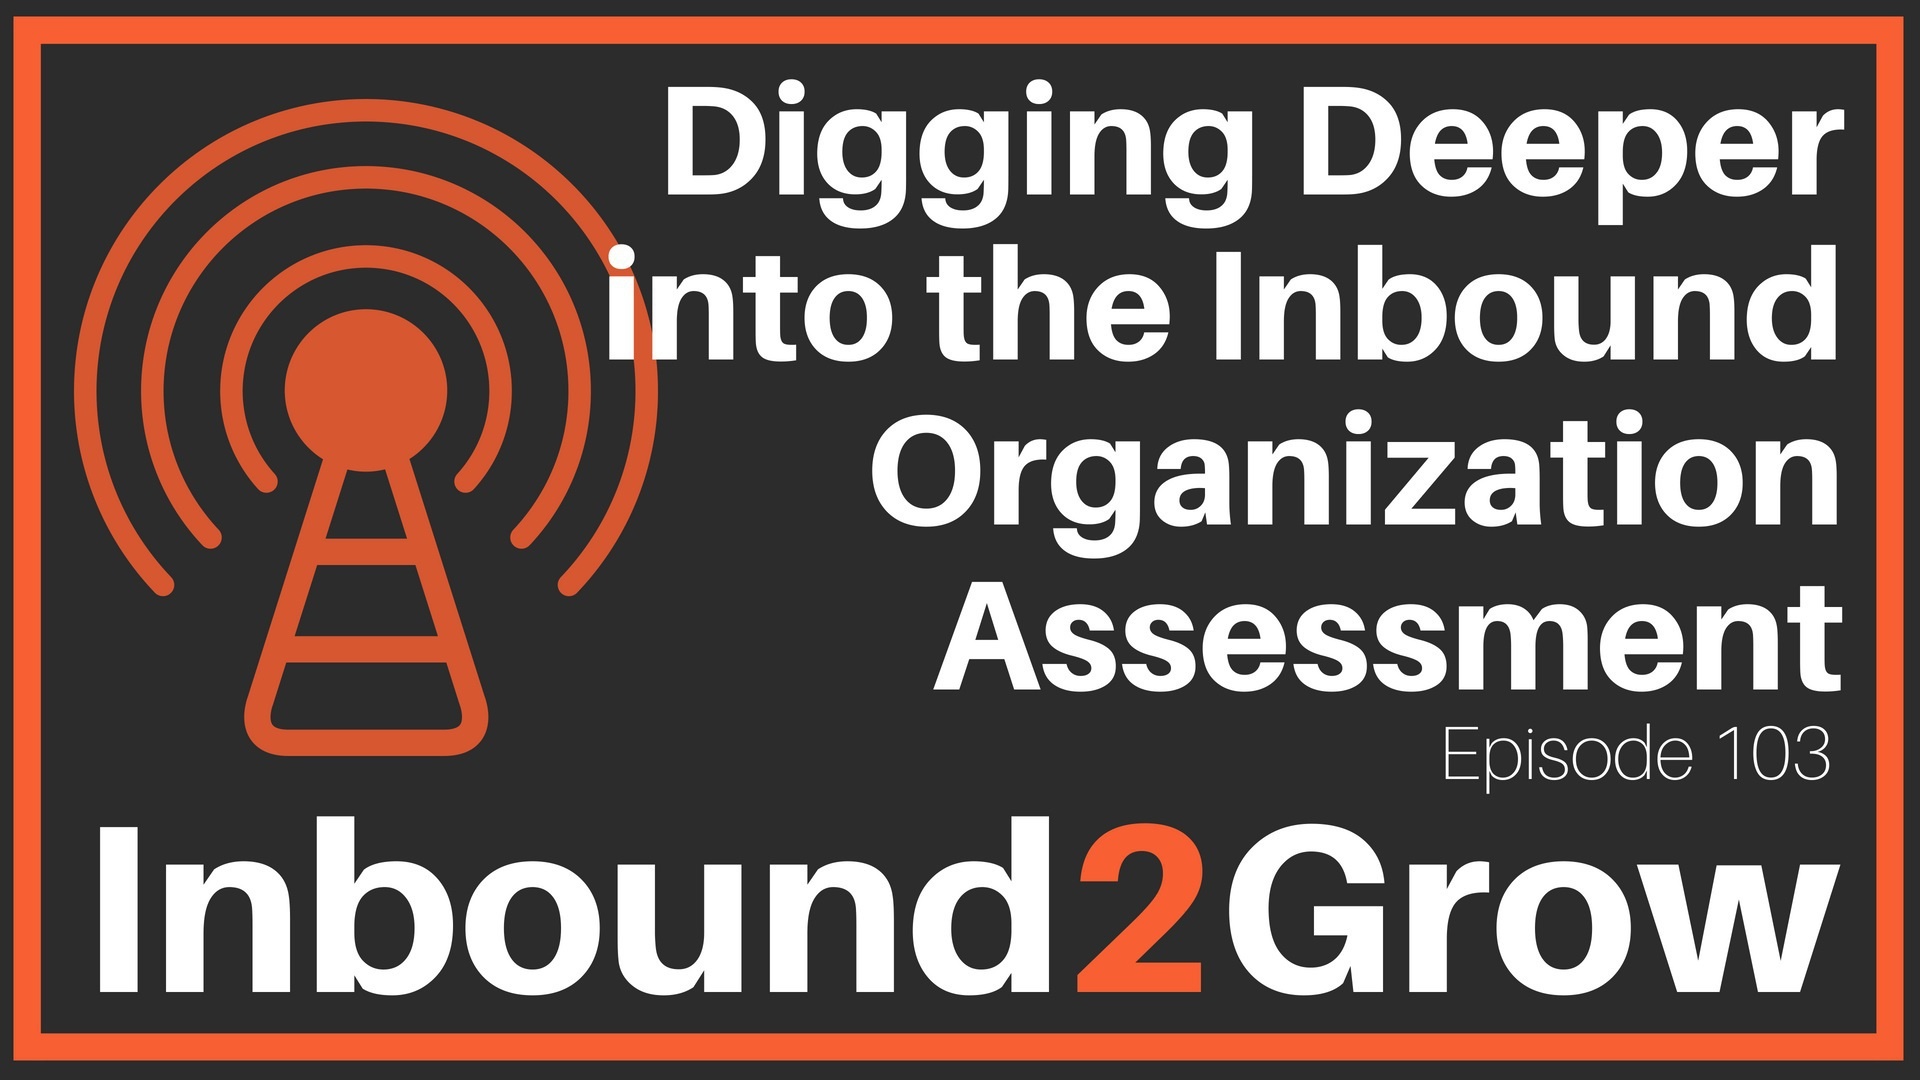 Inbound2Grow Episode 103: Digging Deeper into the Inbound Organization Assessment